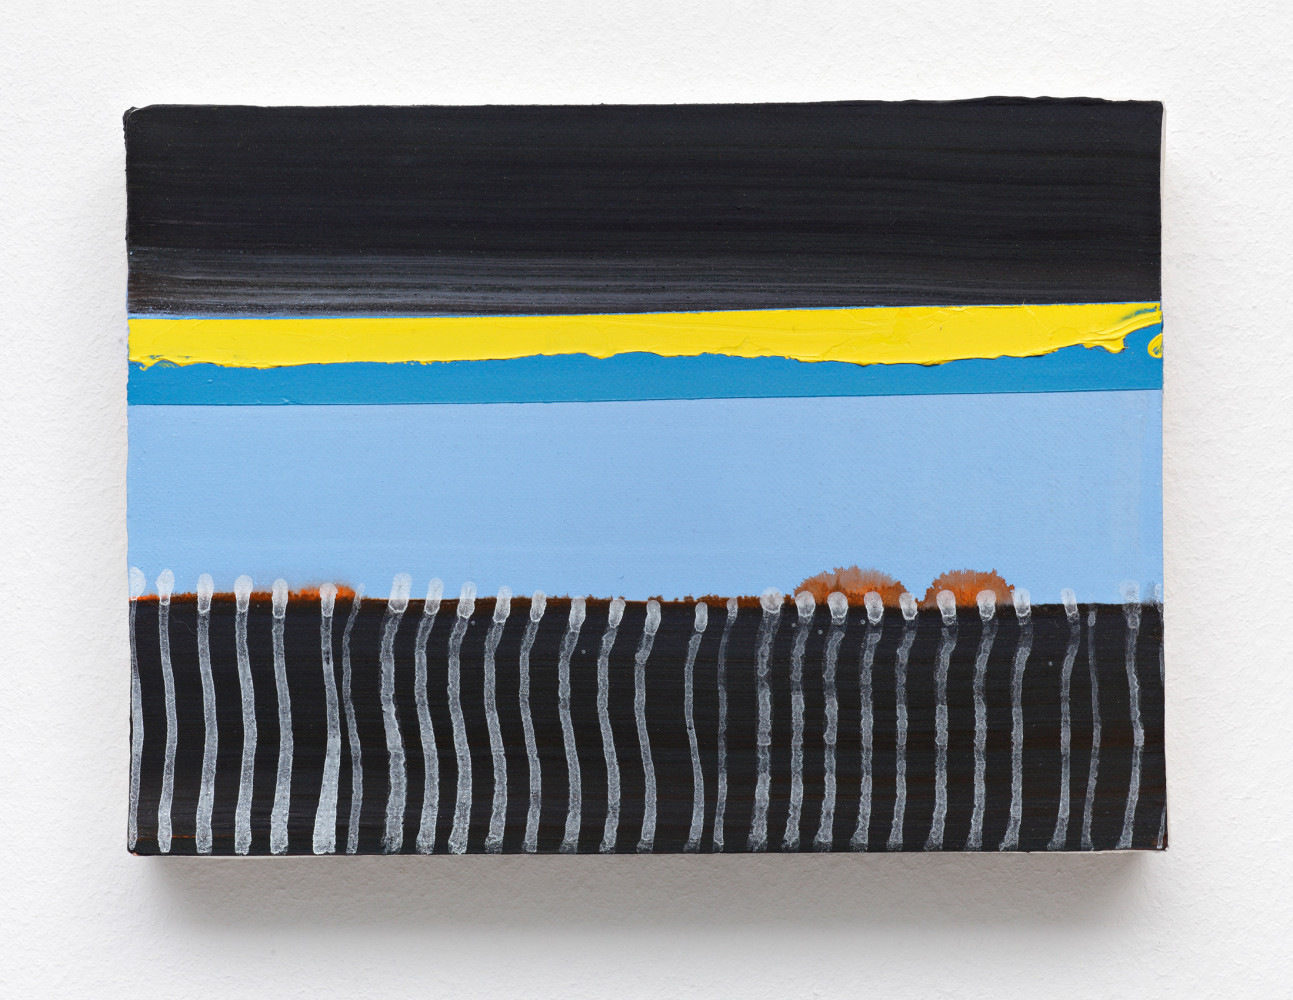 ‘Juan Uslé, Polaris III’, 2009, acrylic, pigment and dispersion on canvas